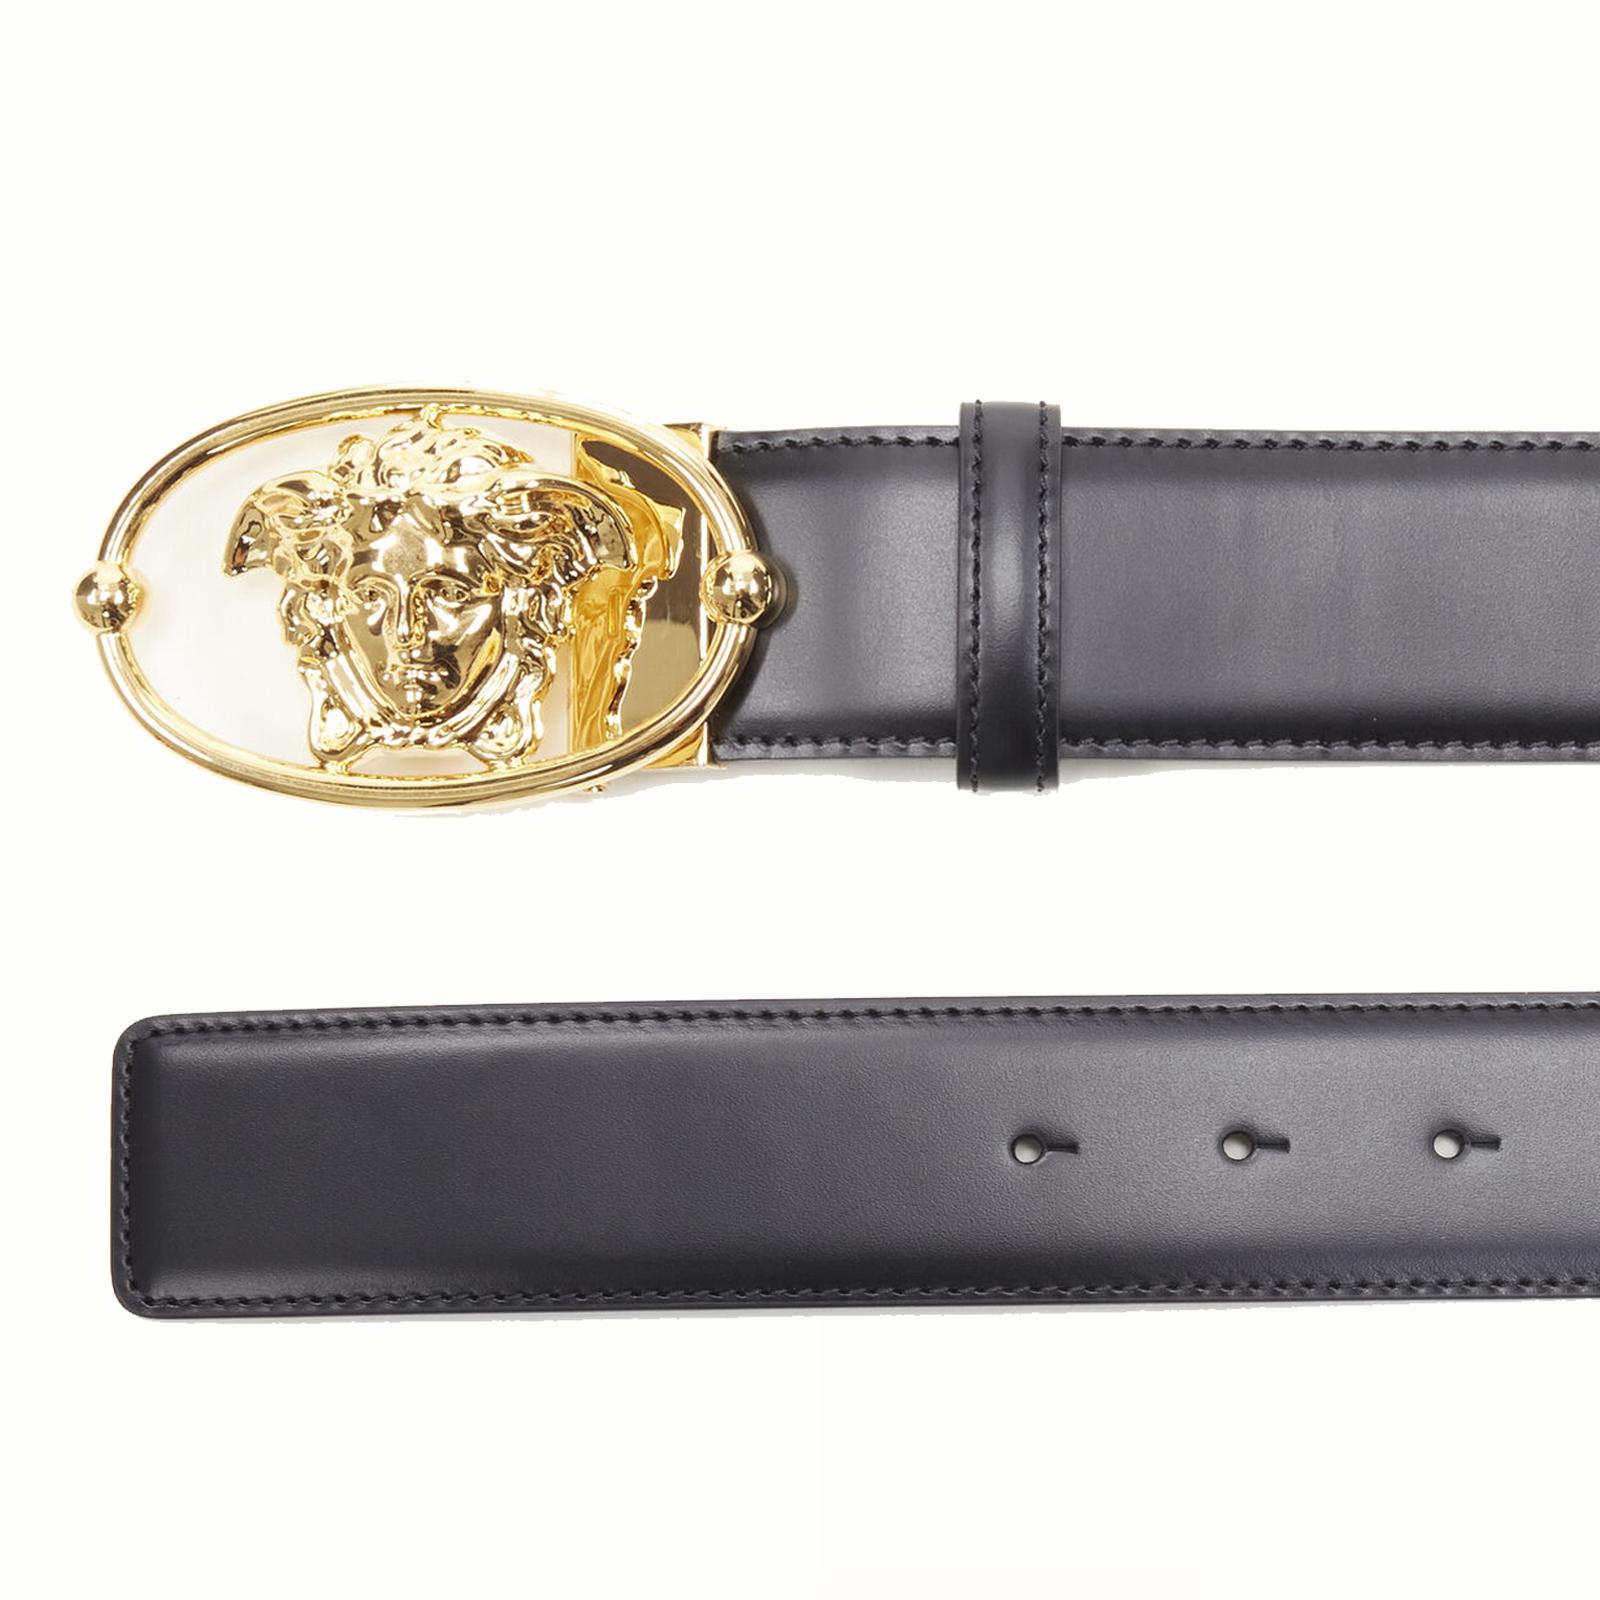 Black new VERSACE La Medusa Insignia gold oval 3D buckle black leather belt 115cm 46